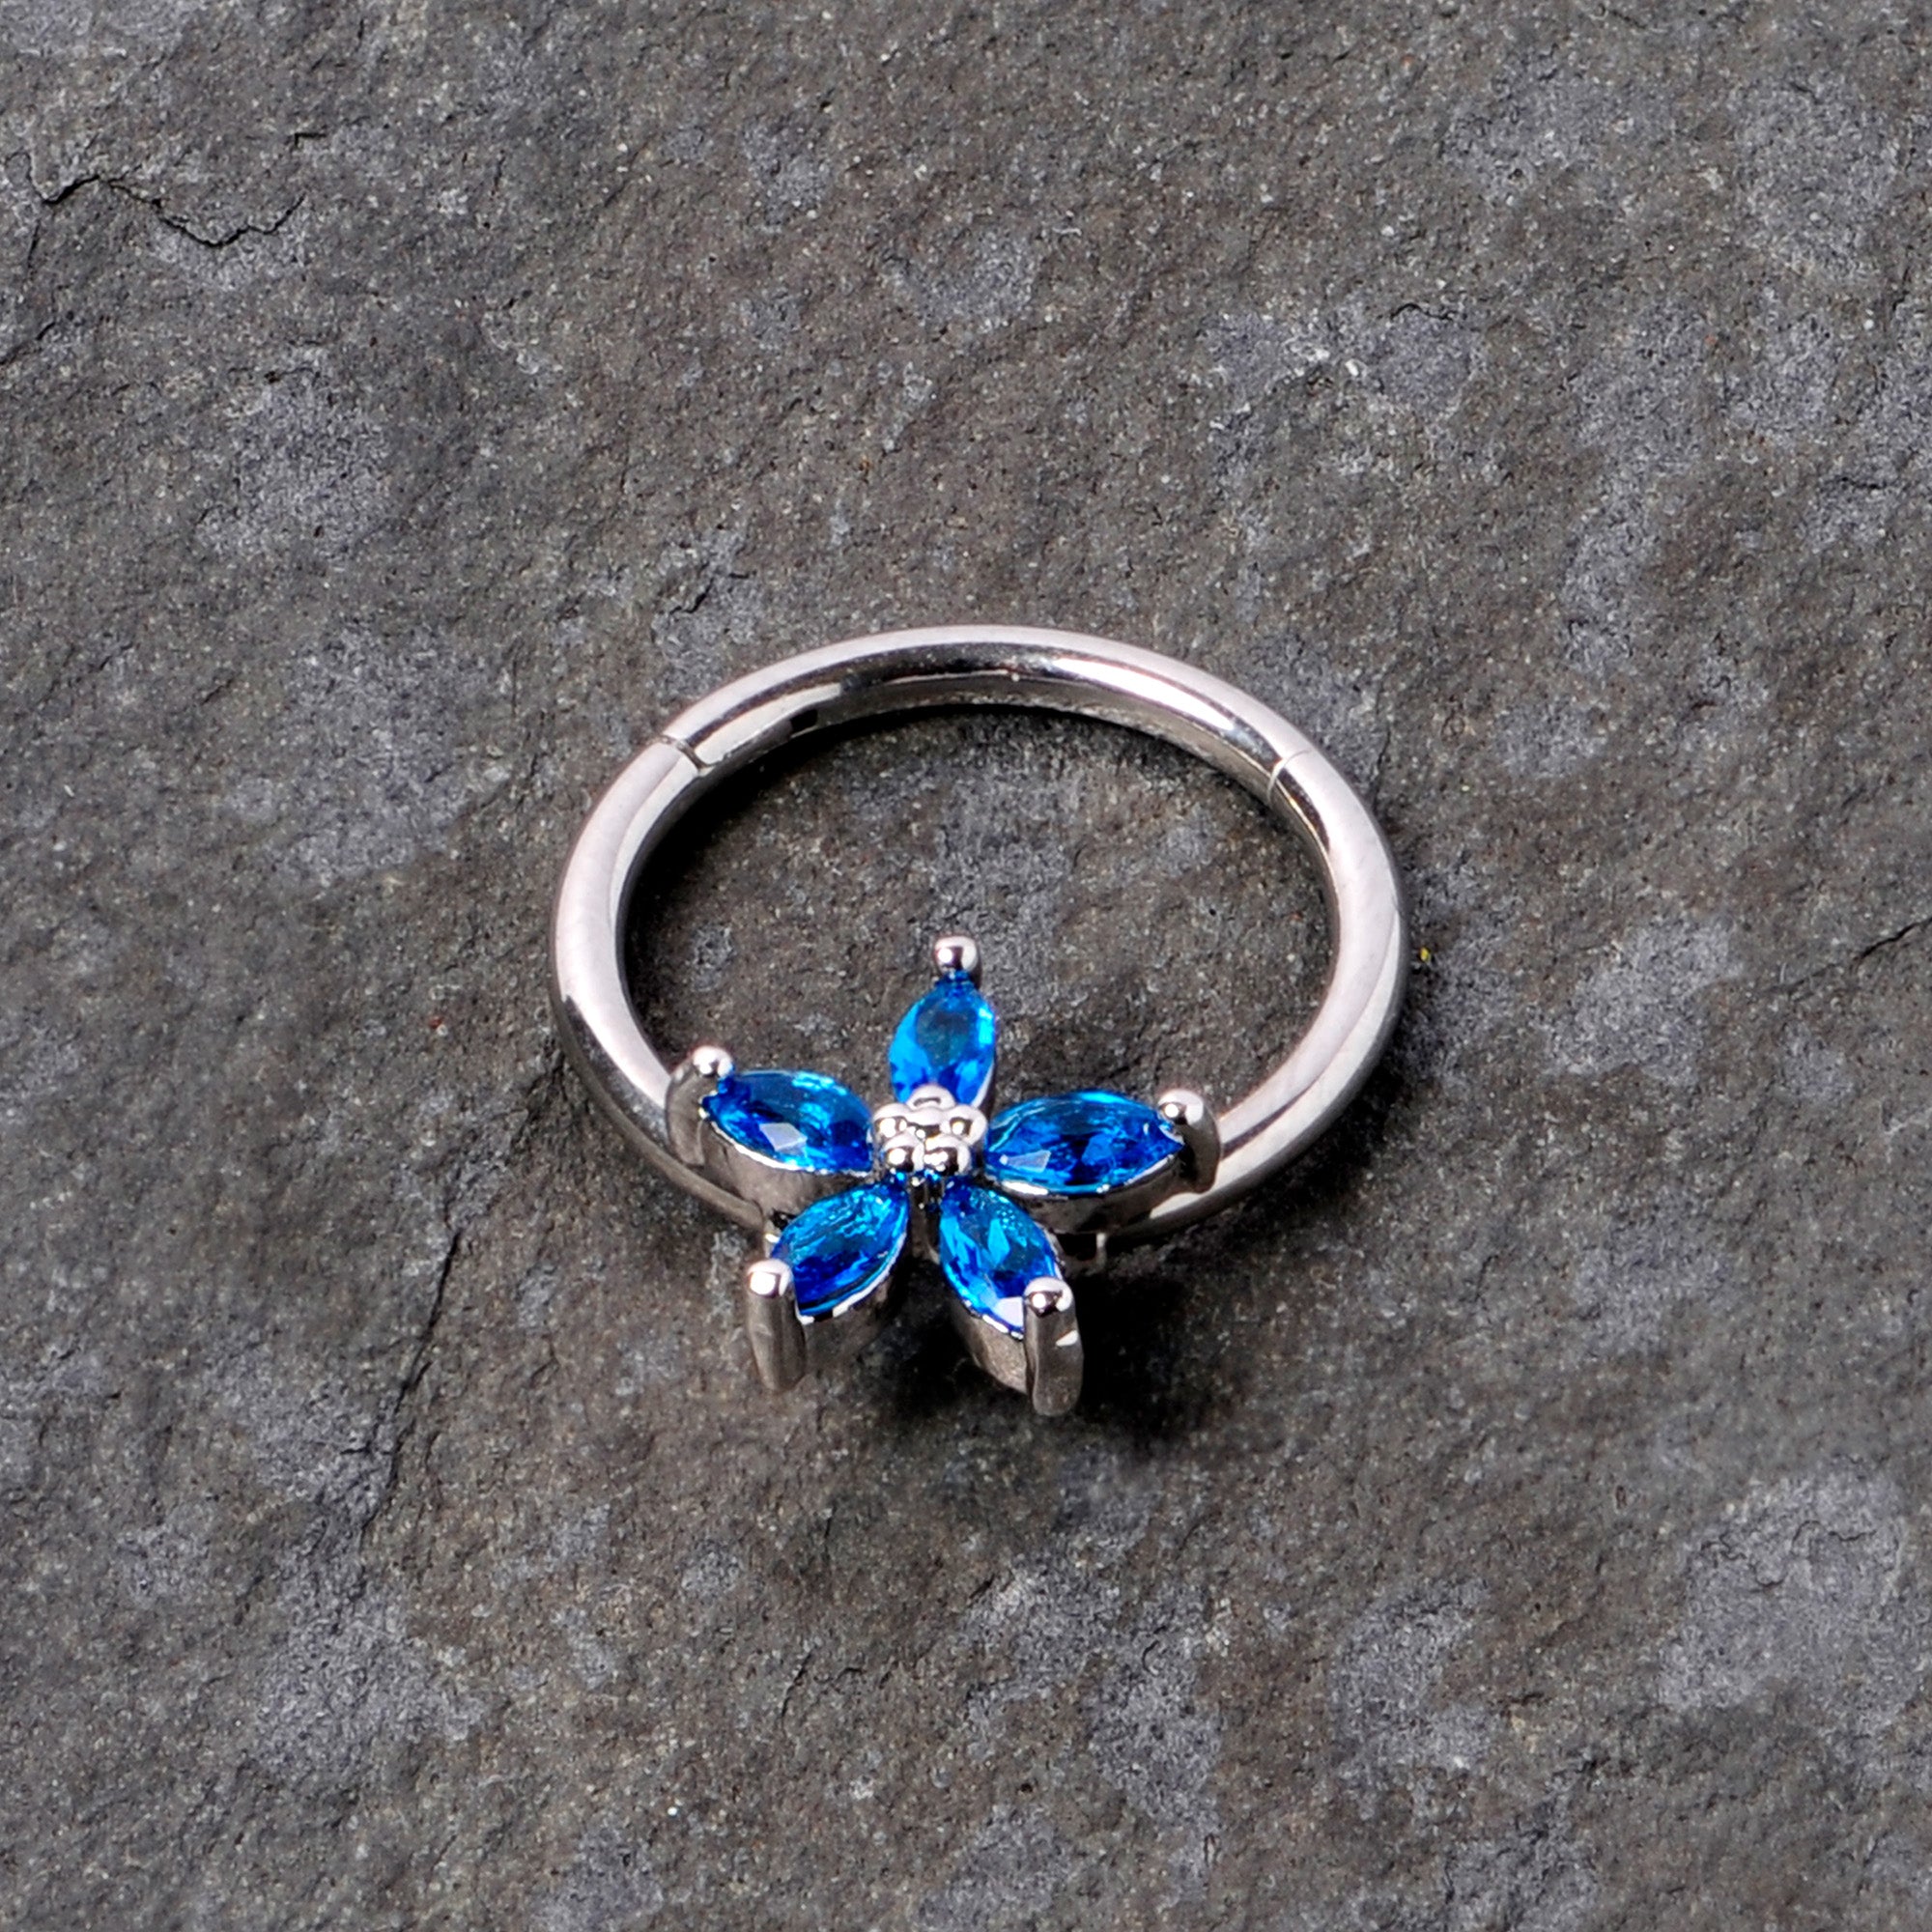 16 Gauge 3/8 Blue Gem Royal Flower Hinged Segment Ring